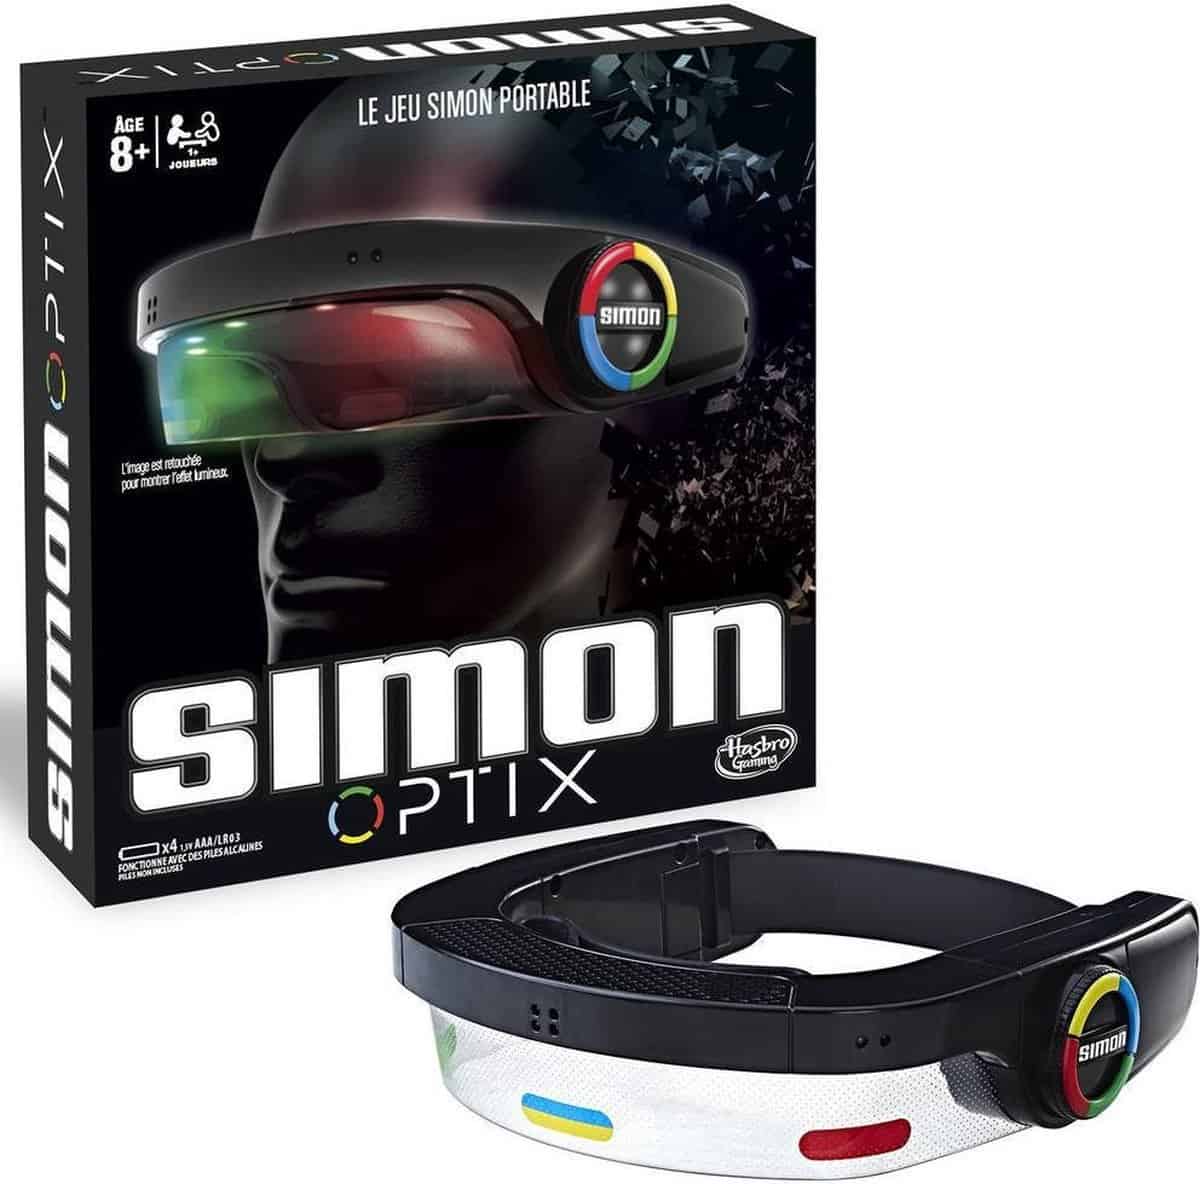 Beste interactieve bril: Hasbro Simon Optix-spel